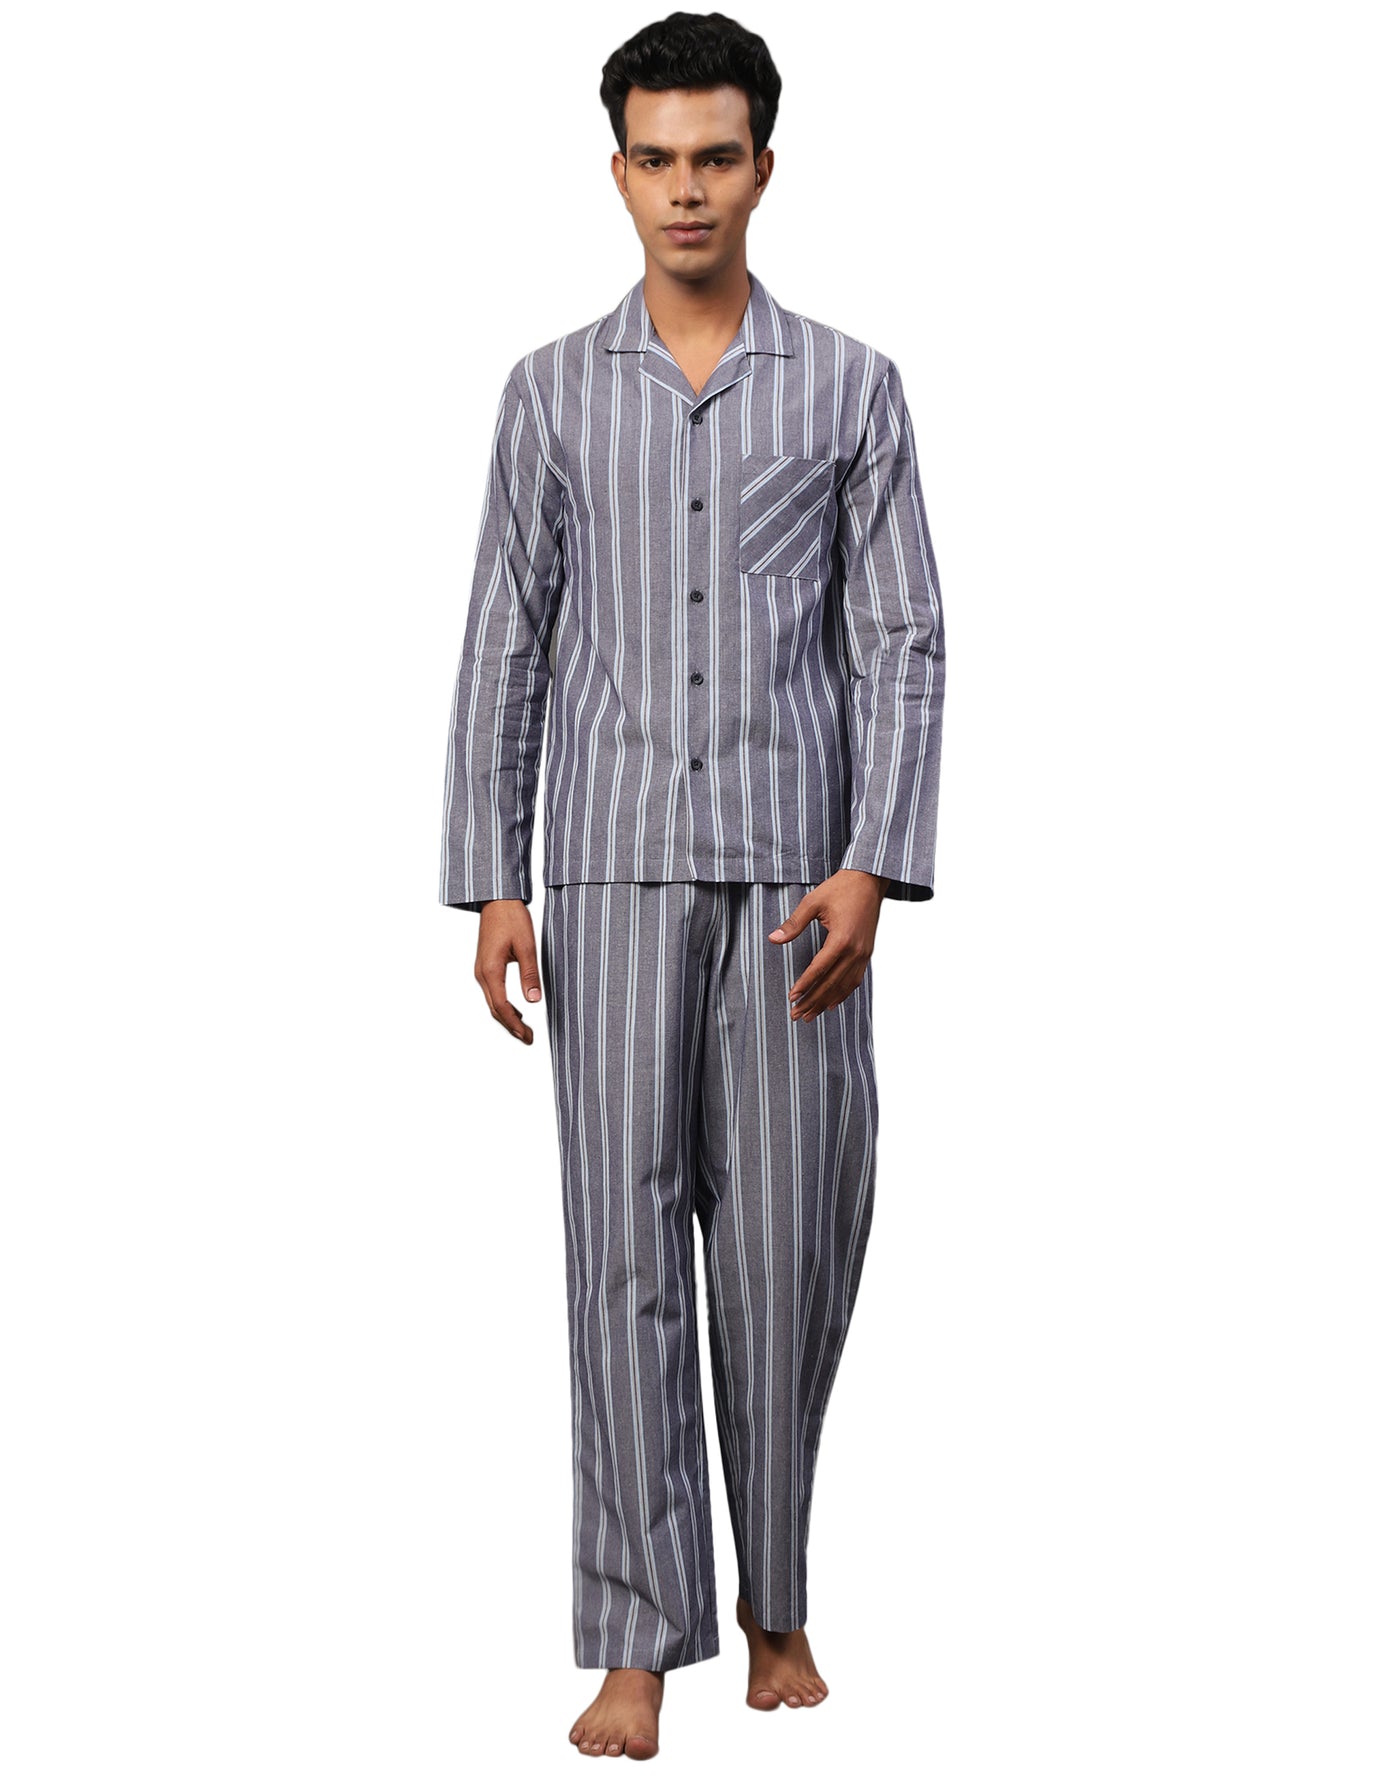 Pyjama Set for Men-Sky Blue Chalk Stripes